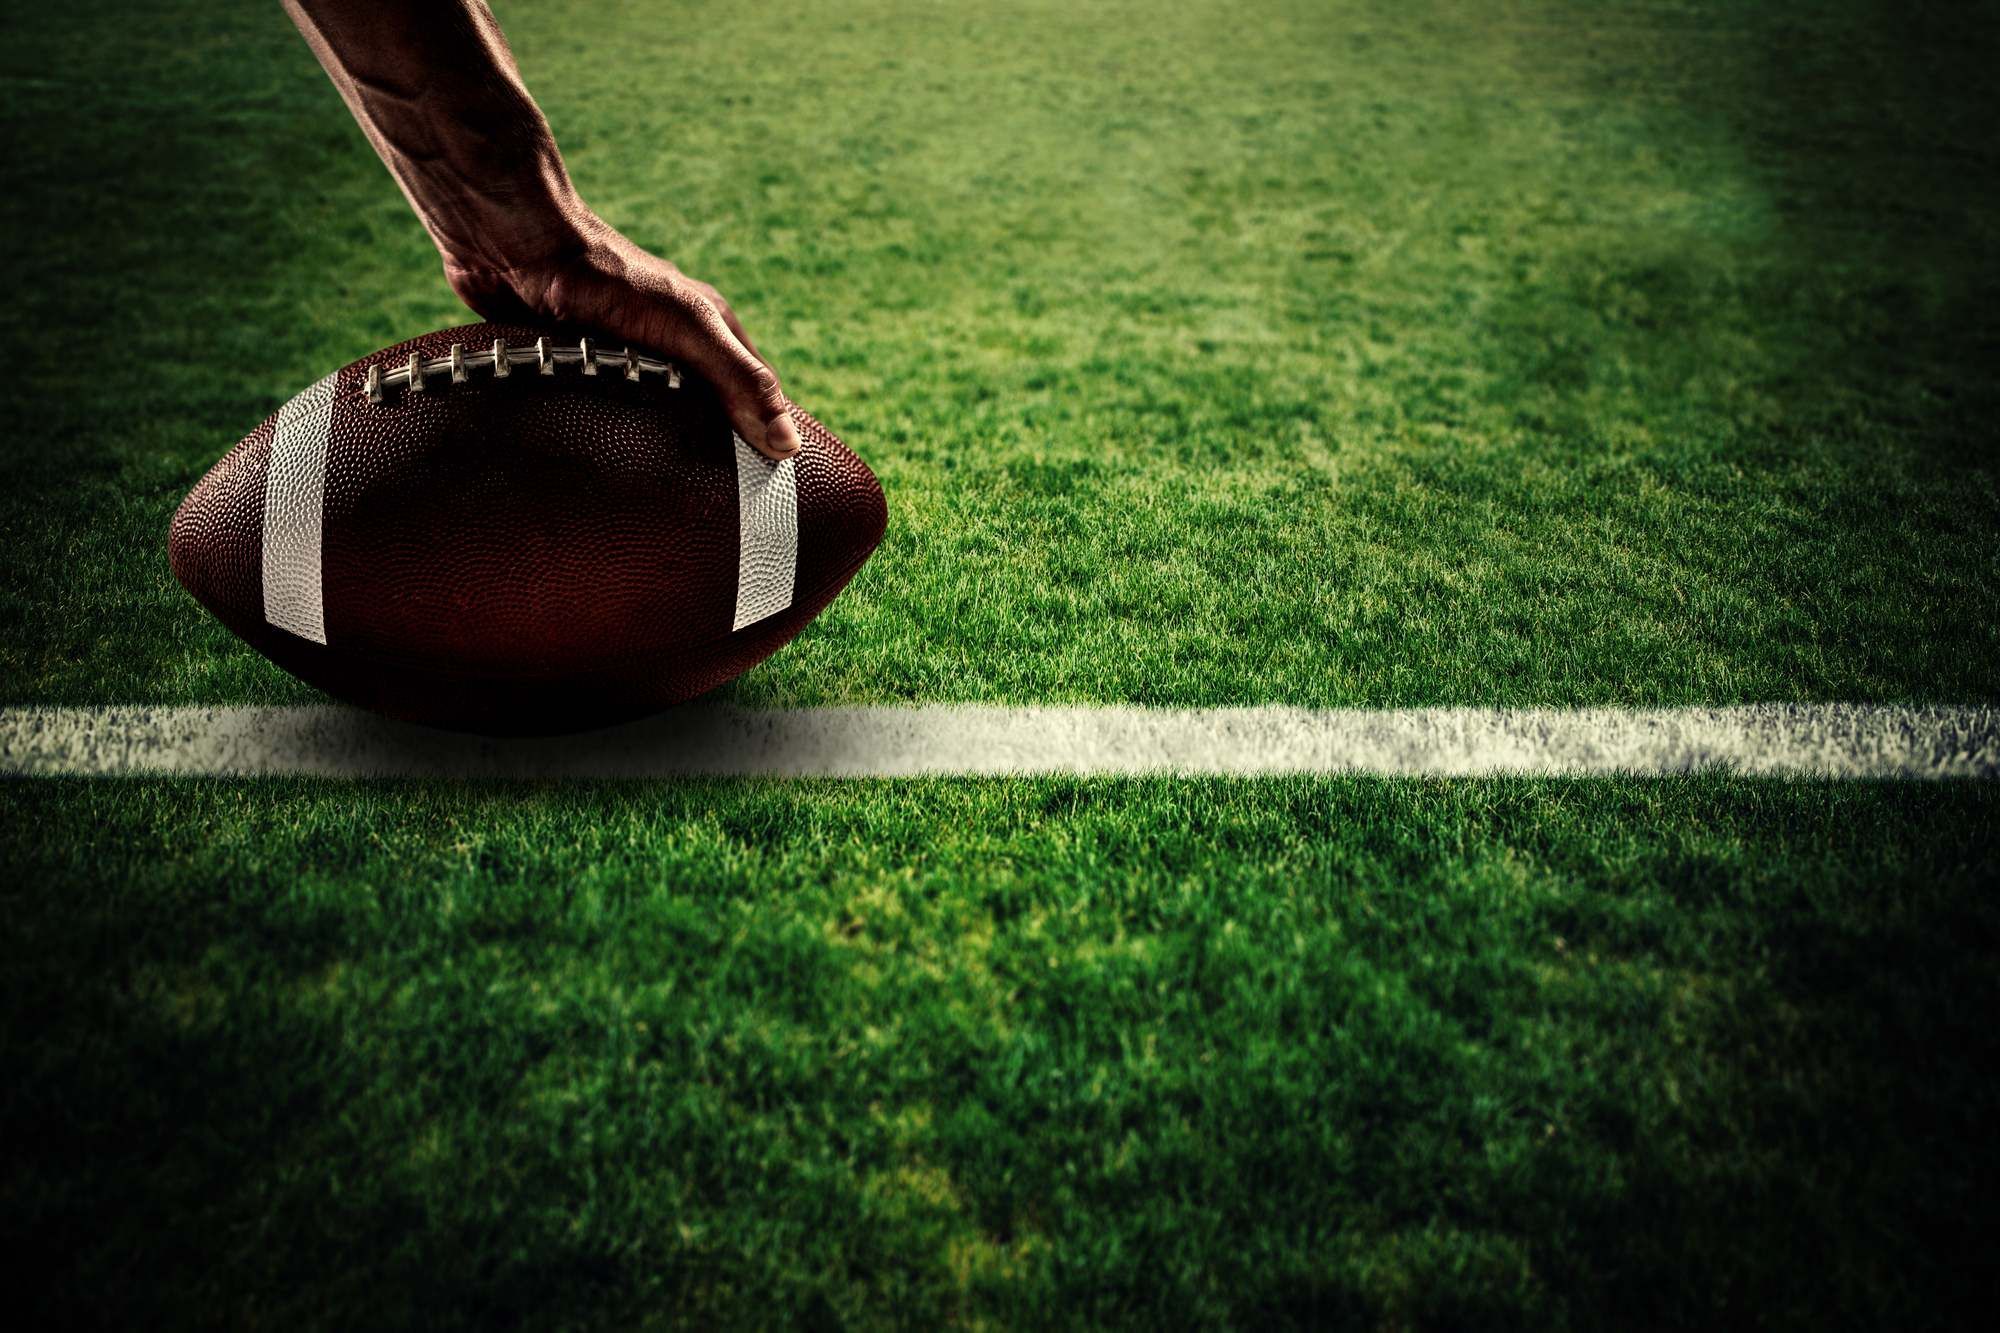 Football player facing dozens of lawsuits alleging sexual assault